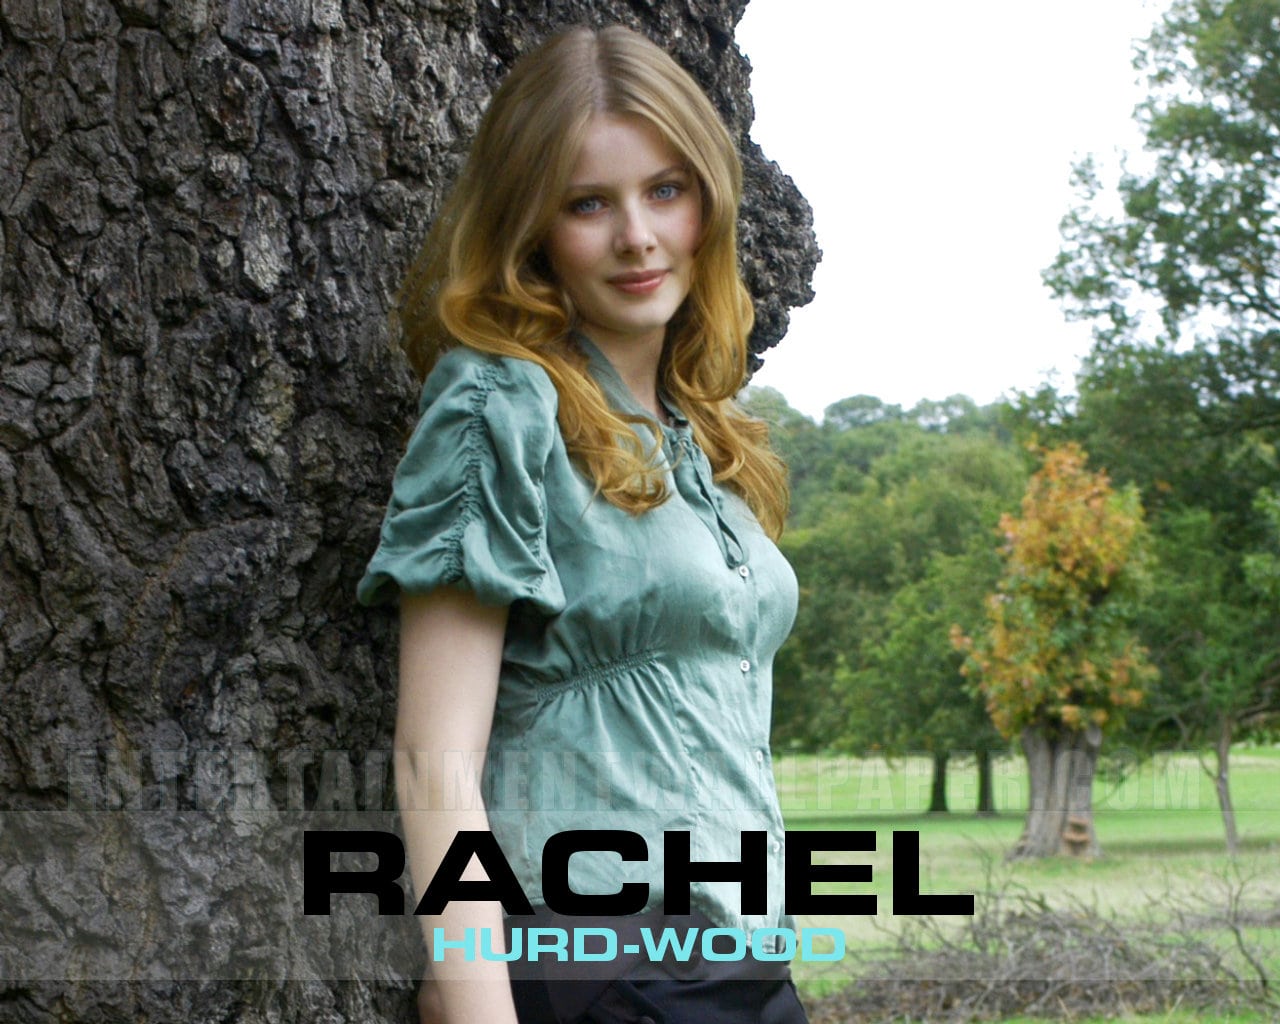 Hurd-wood bikini rachel Rachel Hurd